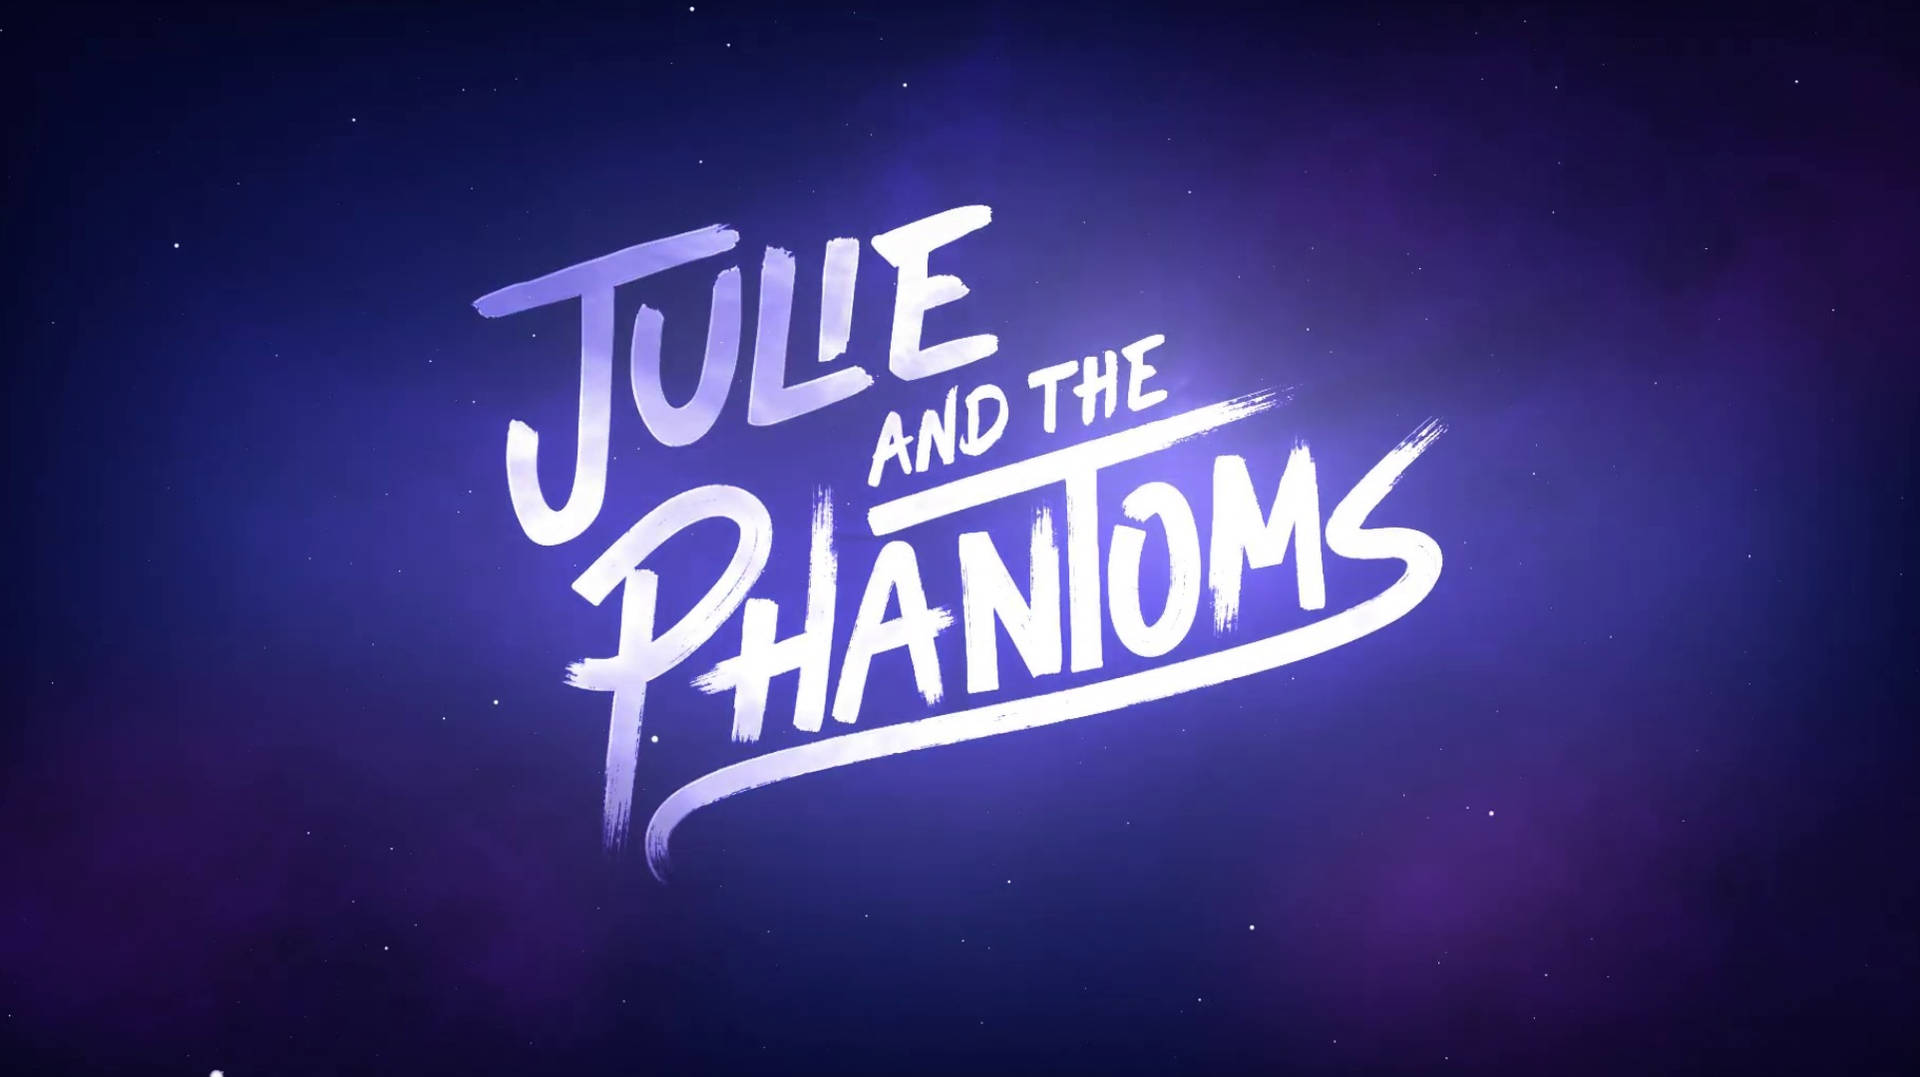 Julie and the Phantoms, a never-ending jam session Wallpaper